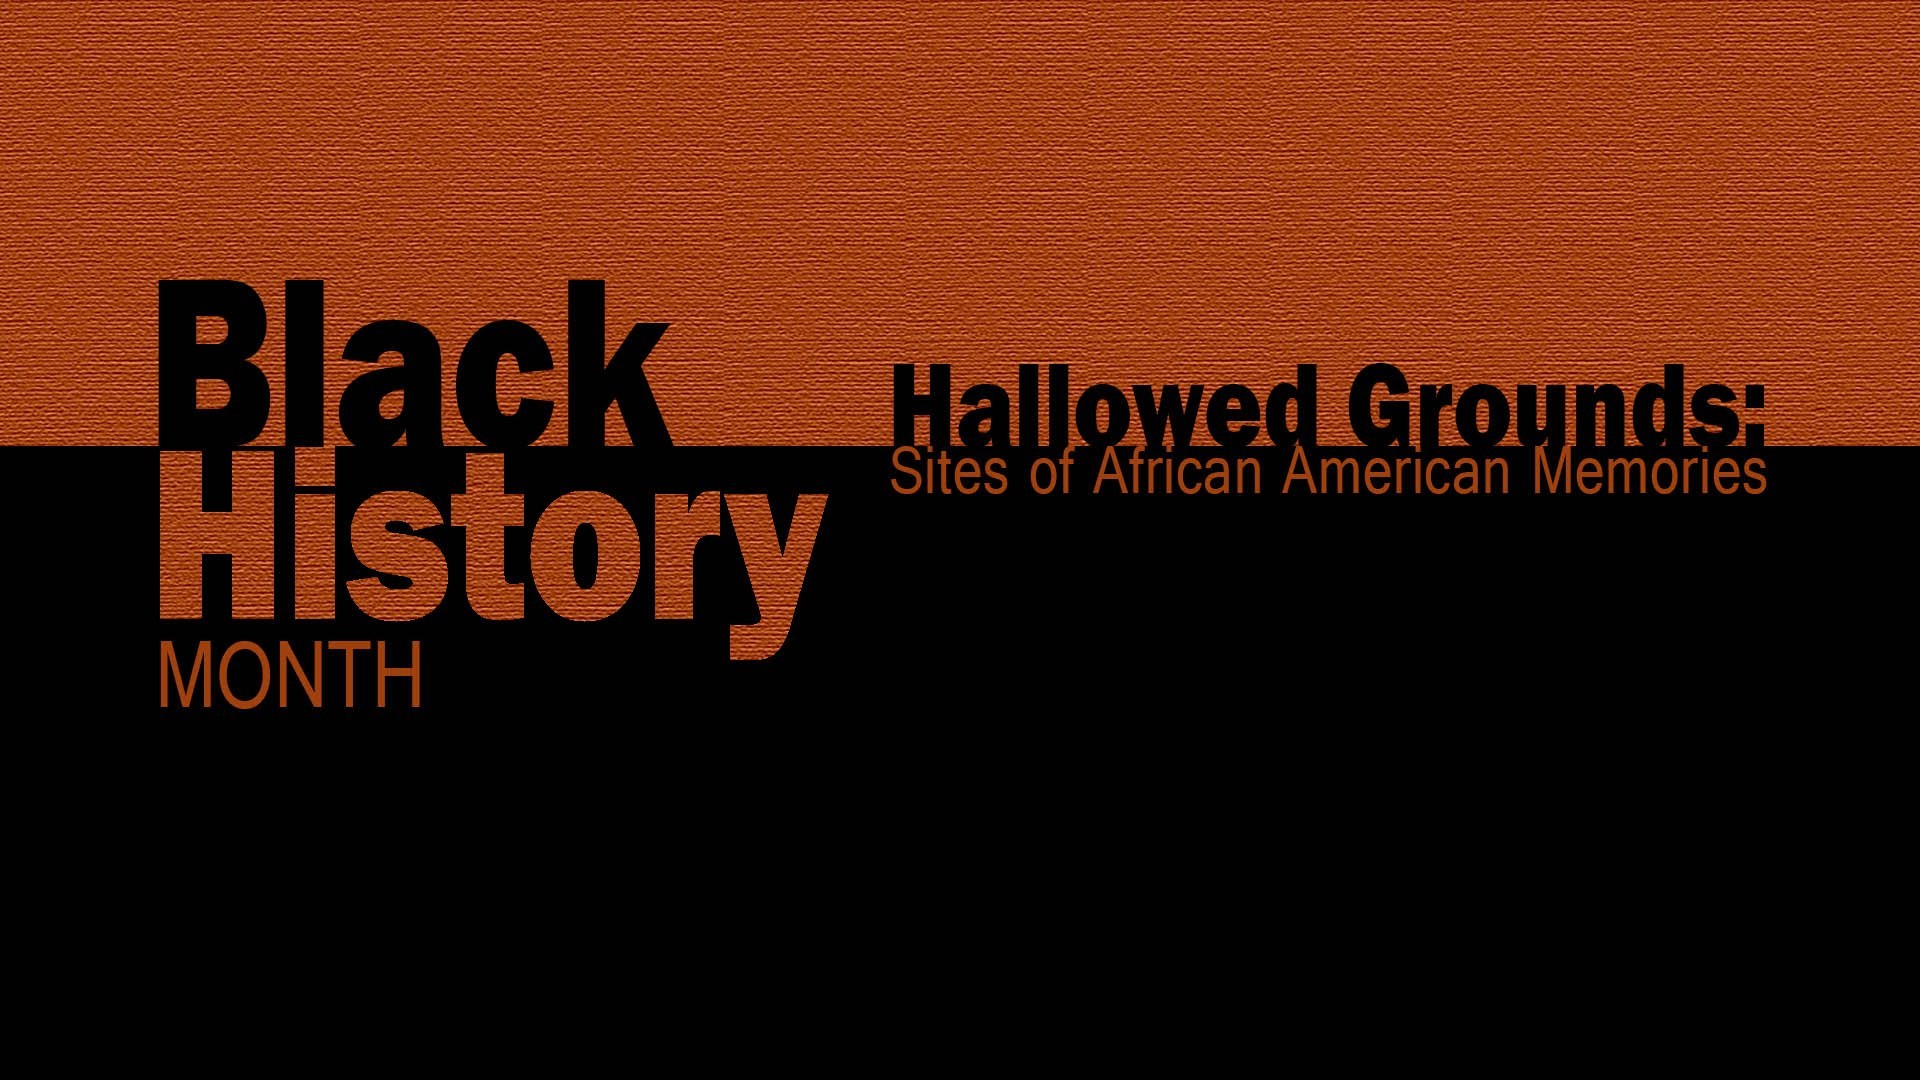 1920x1080 Black History Month 2016